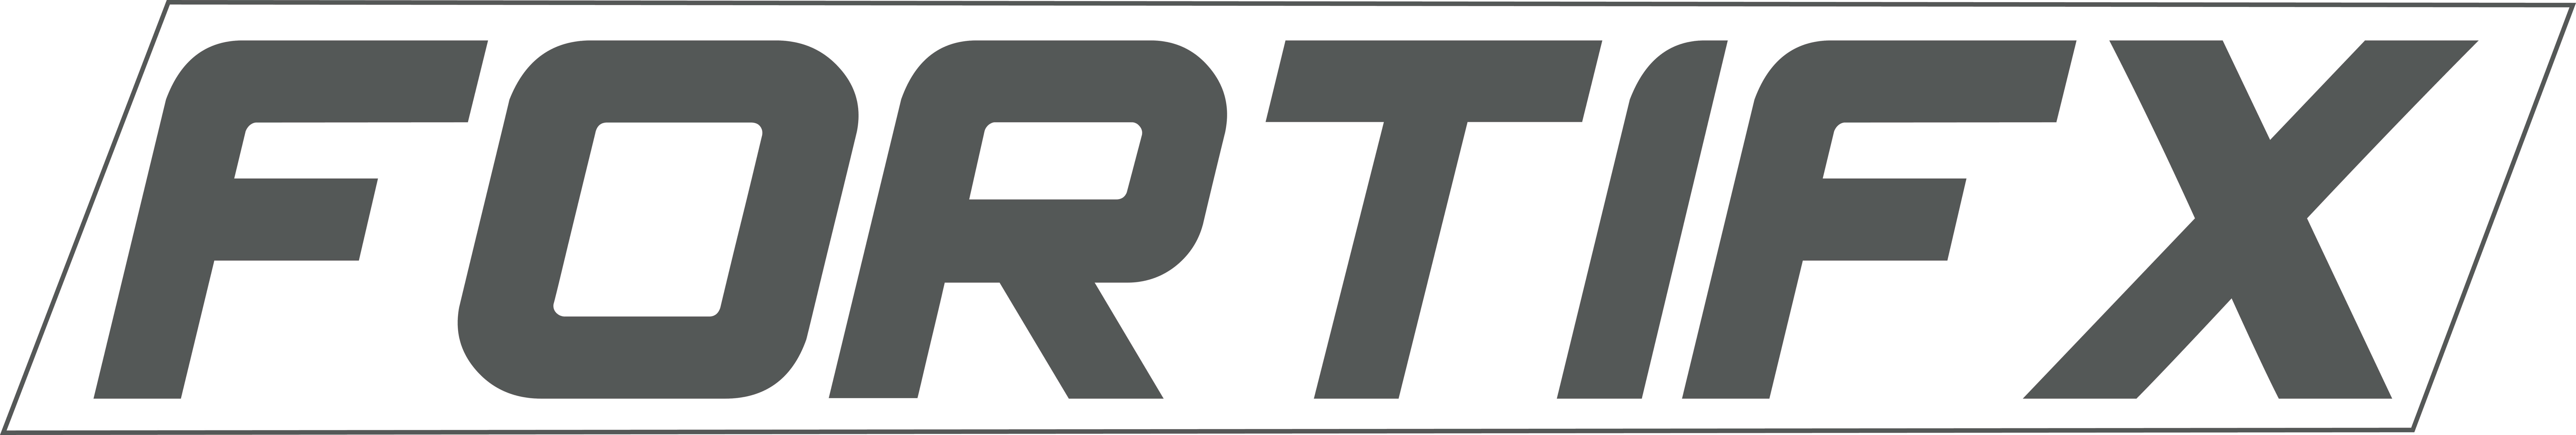 fortifix logo